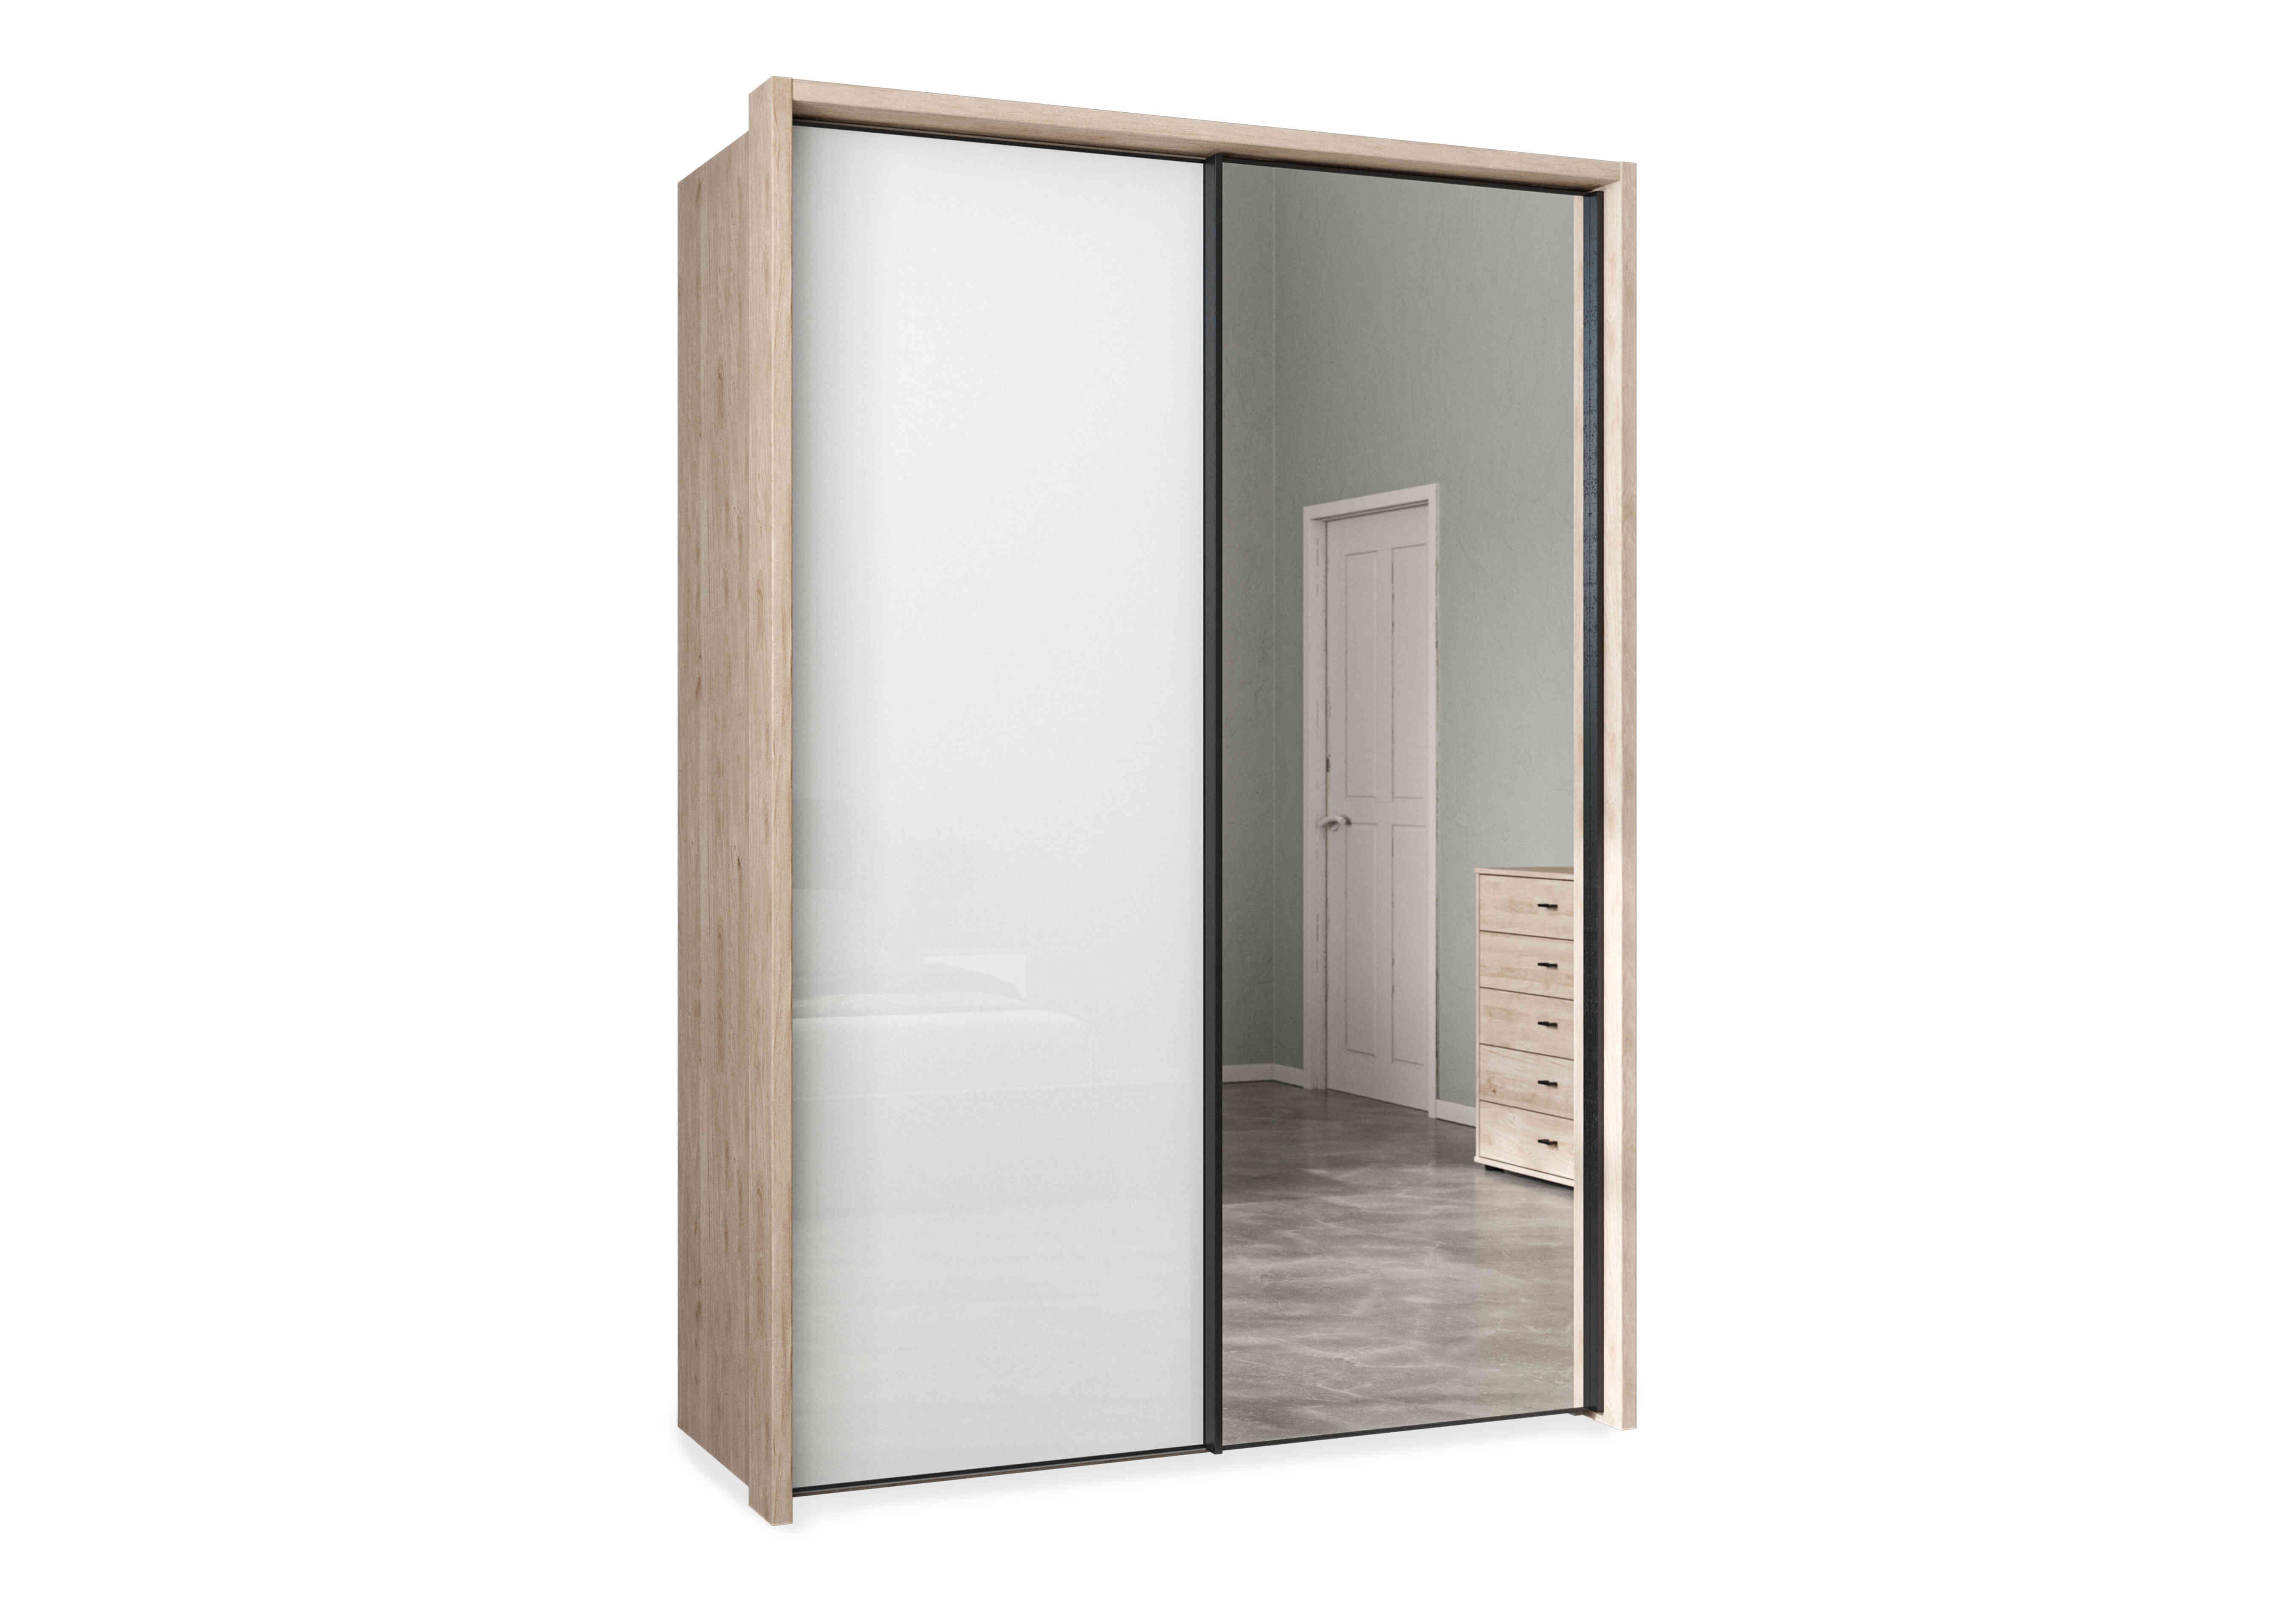 Dallas 160cm 2 Door Sliding Glass Wardrobe with Mirror Door in Holm Oak And White on Furniture Village